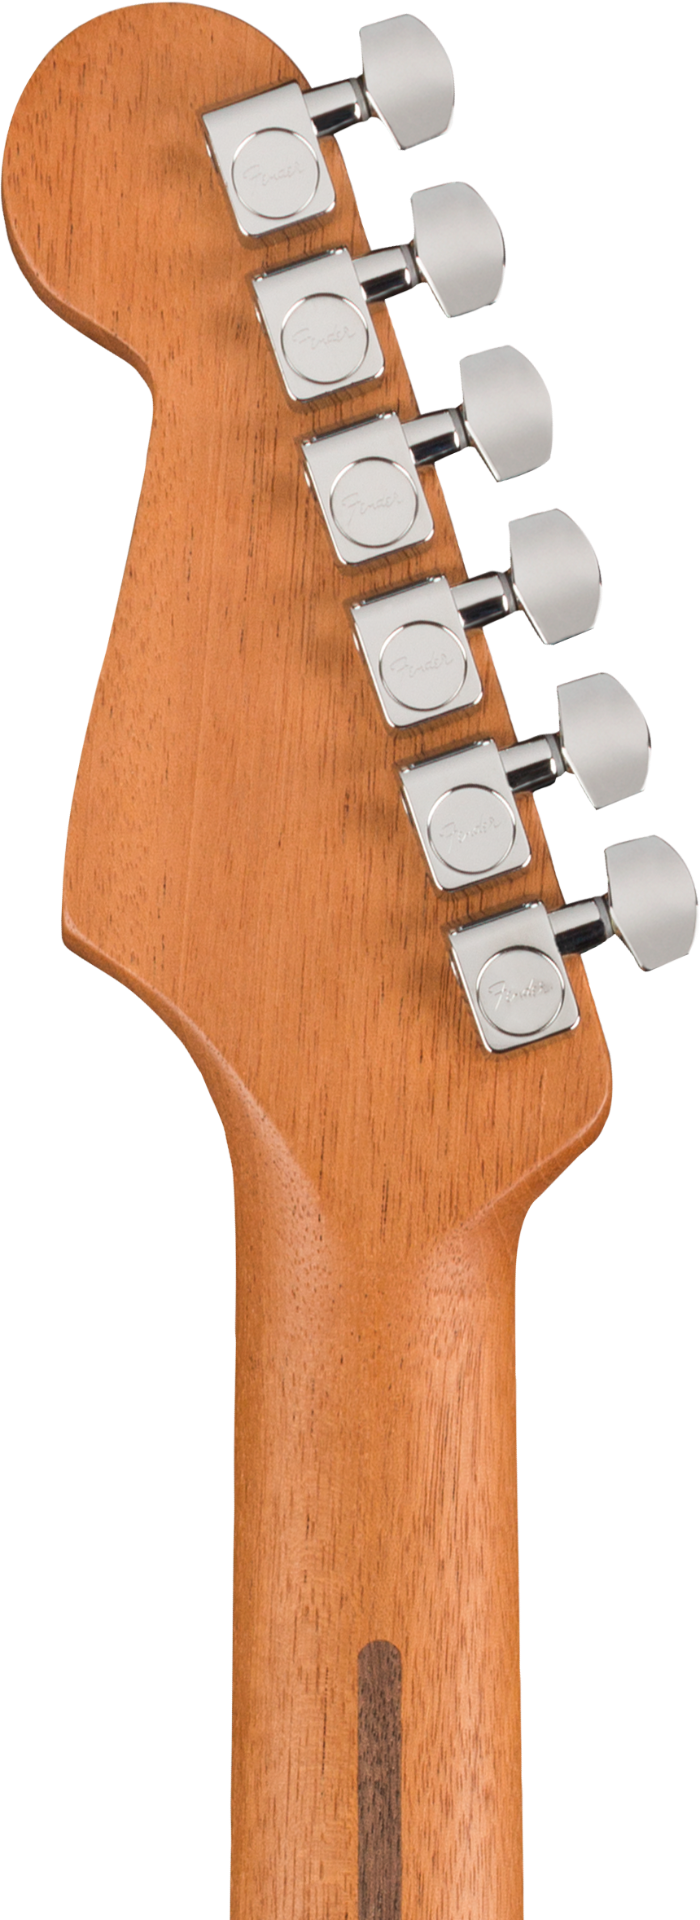 Fender Acoustisonic Stratocaster Acoustic Electric Guitar in 3 Tone Sunburst